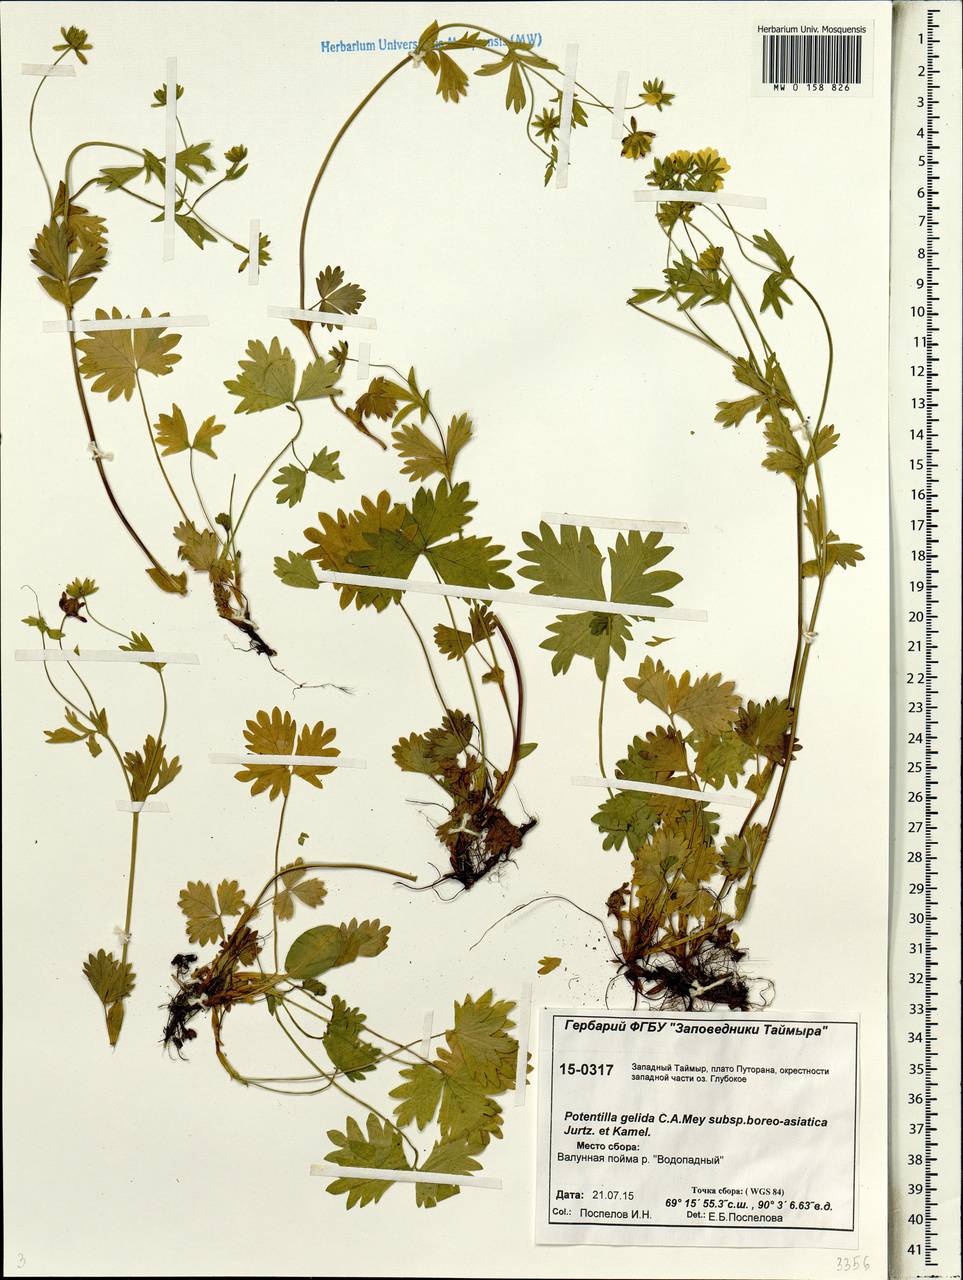 Potentilla crantzii subsp. gelida (C. A. Mey.) Soják, Siberia, Central Siberia (S3) (Russia)